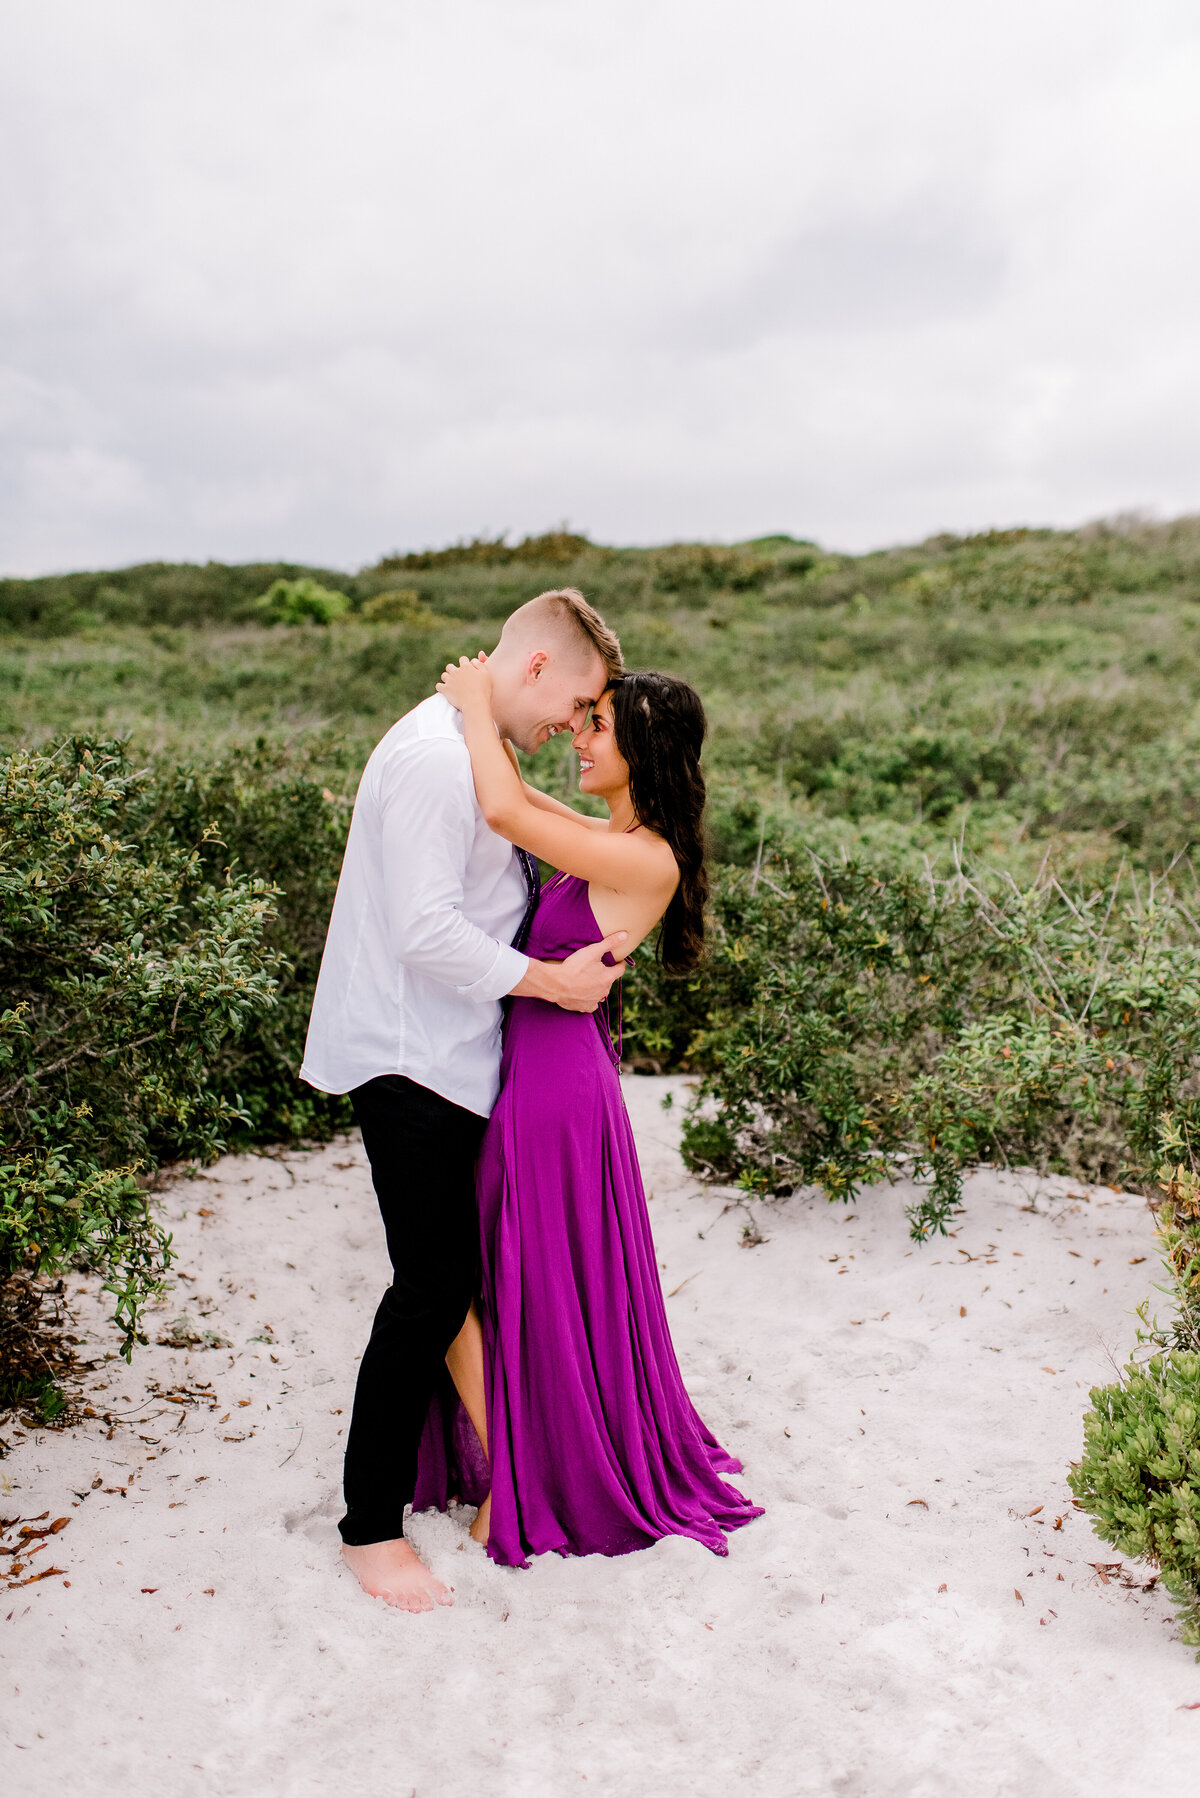 Grayton Beach State Park, FL | Engagement Photos | Jennifer G Photograpy-19